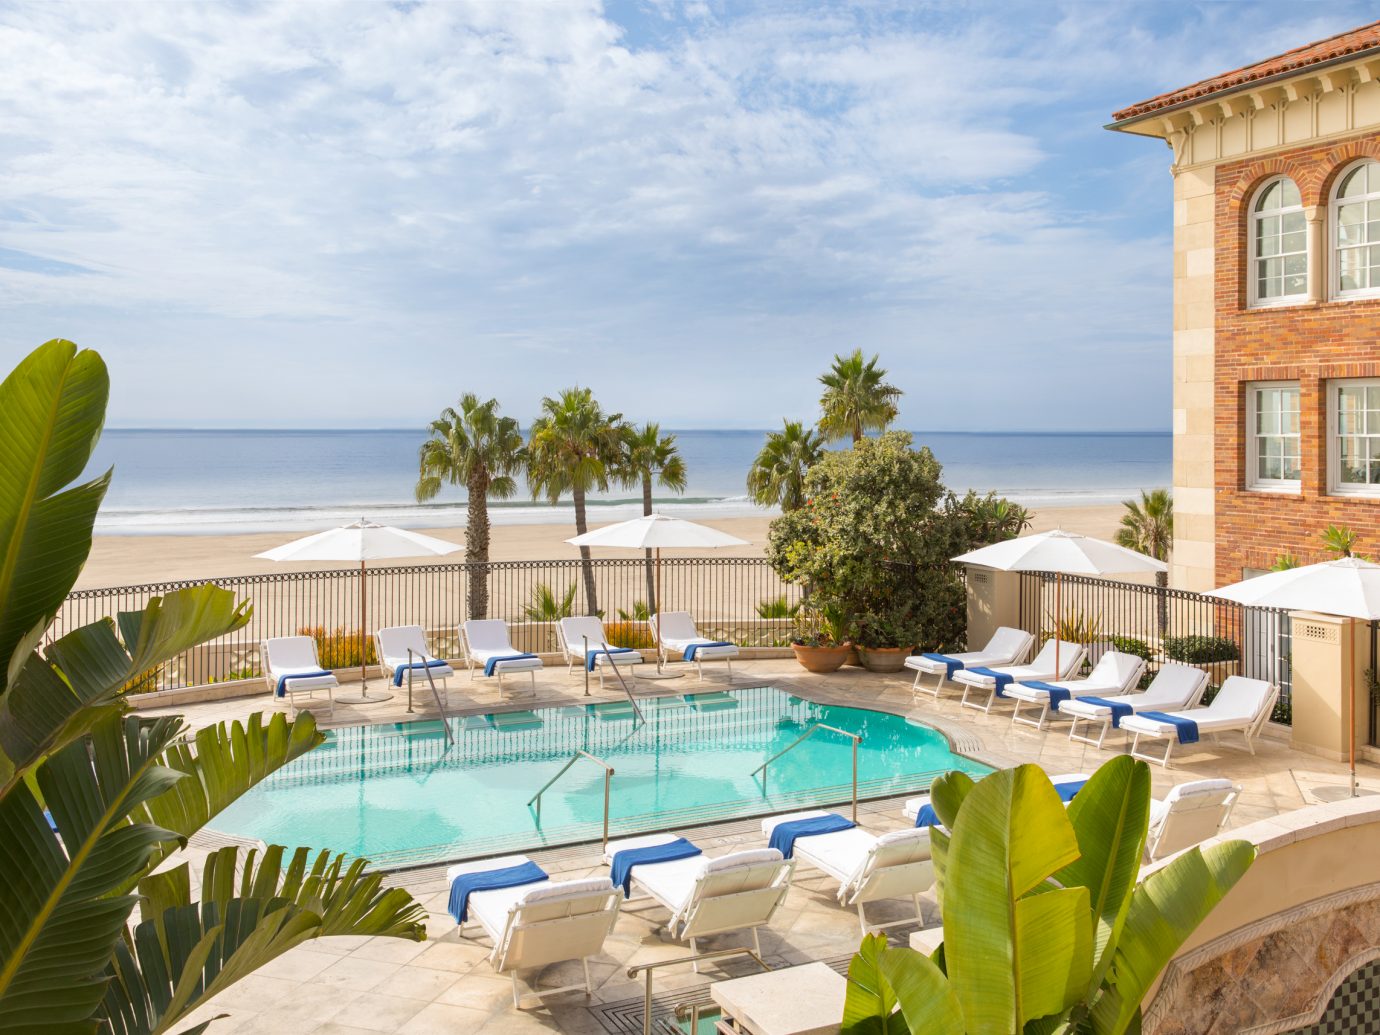 The pool at Casa Del Mar in Santa Monica, California.